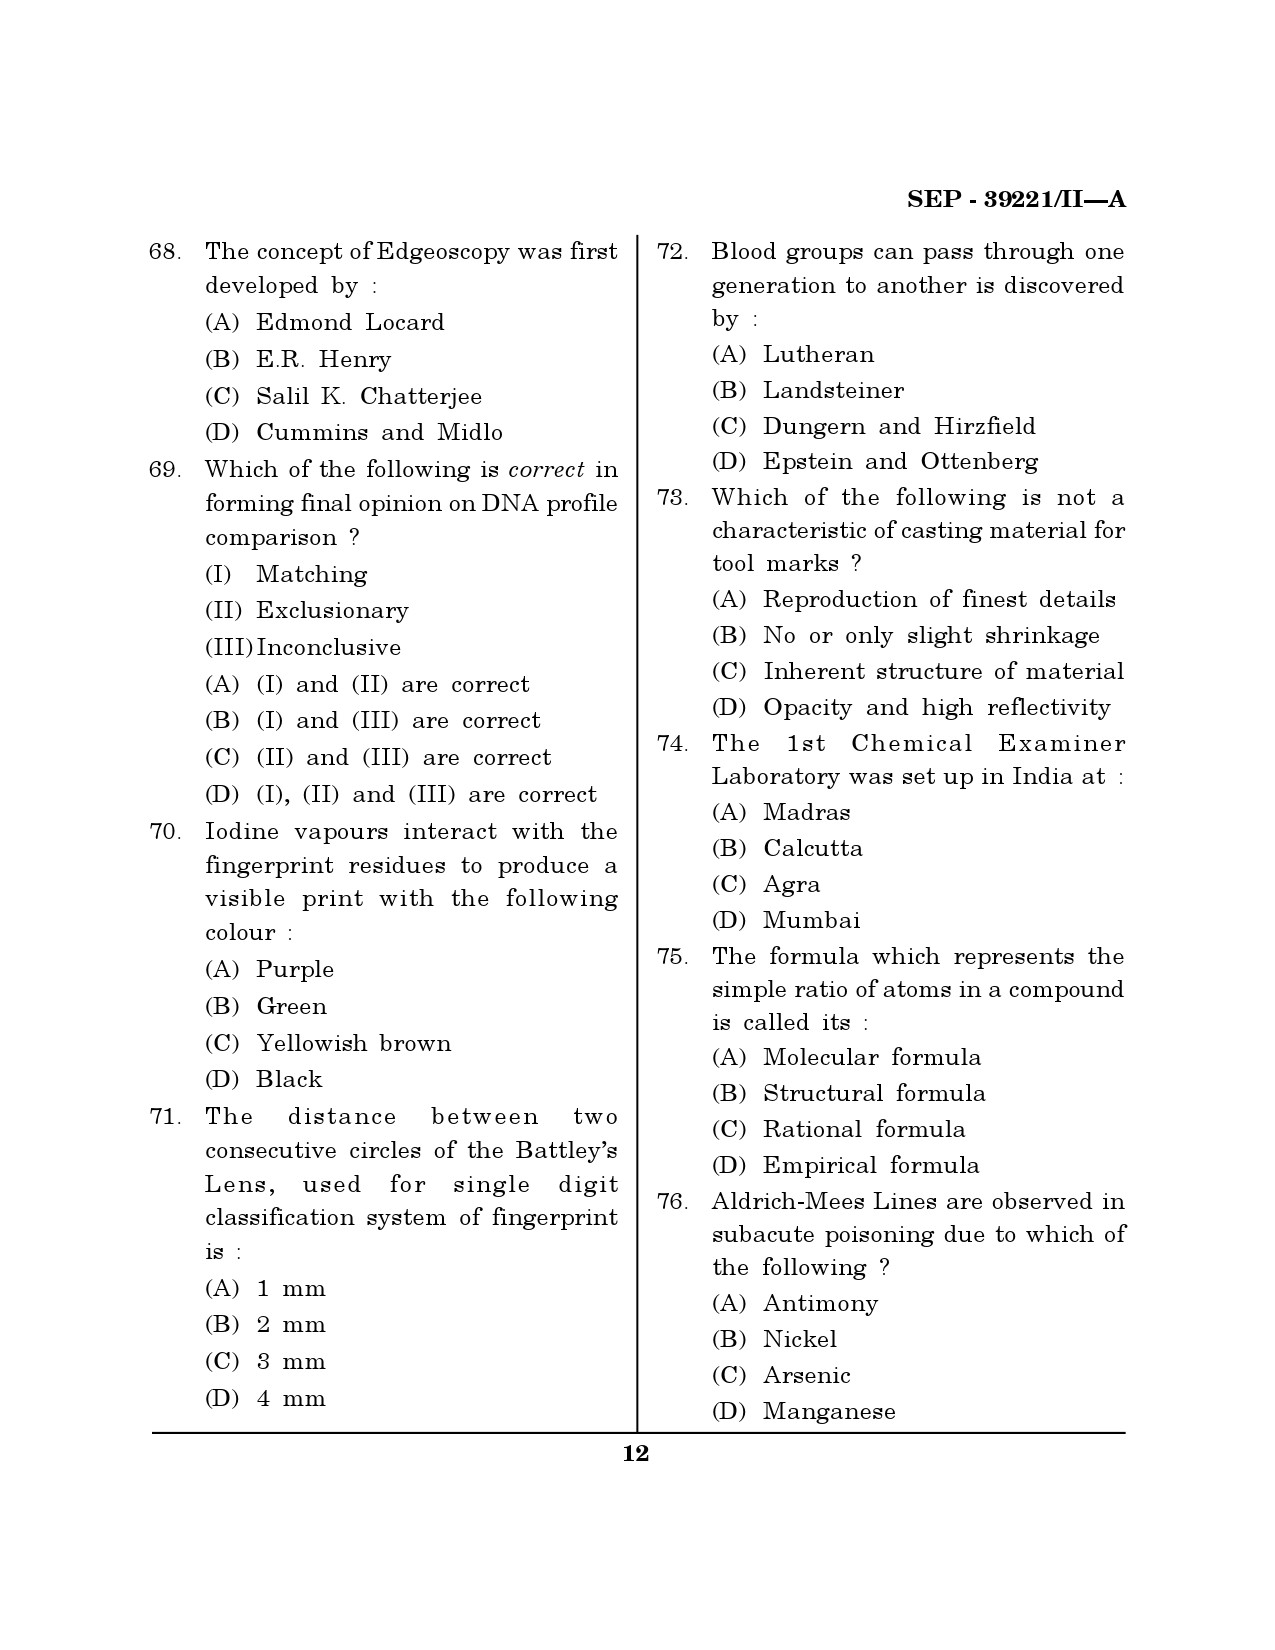 Maharashtra SET Forensic Science Exam Question Paper September 2021 11